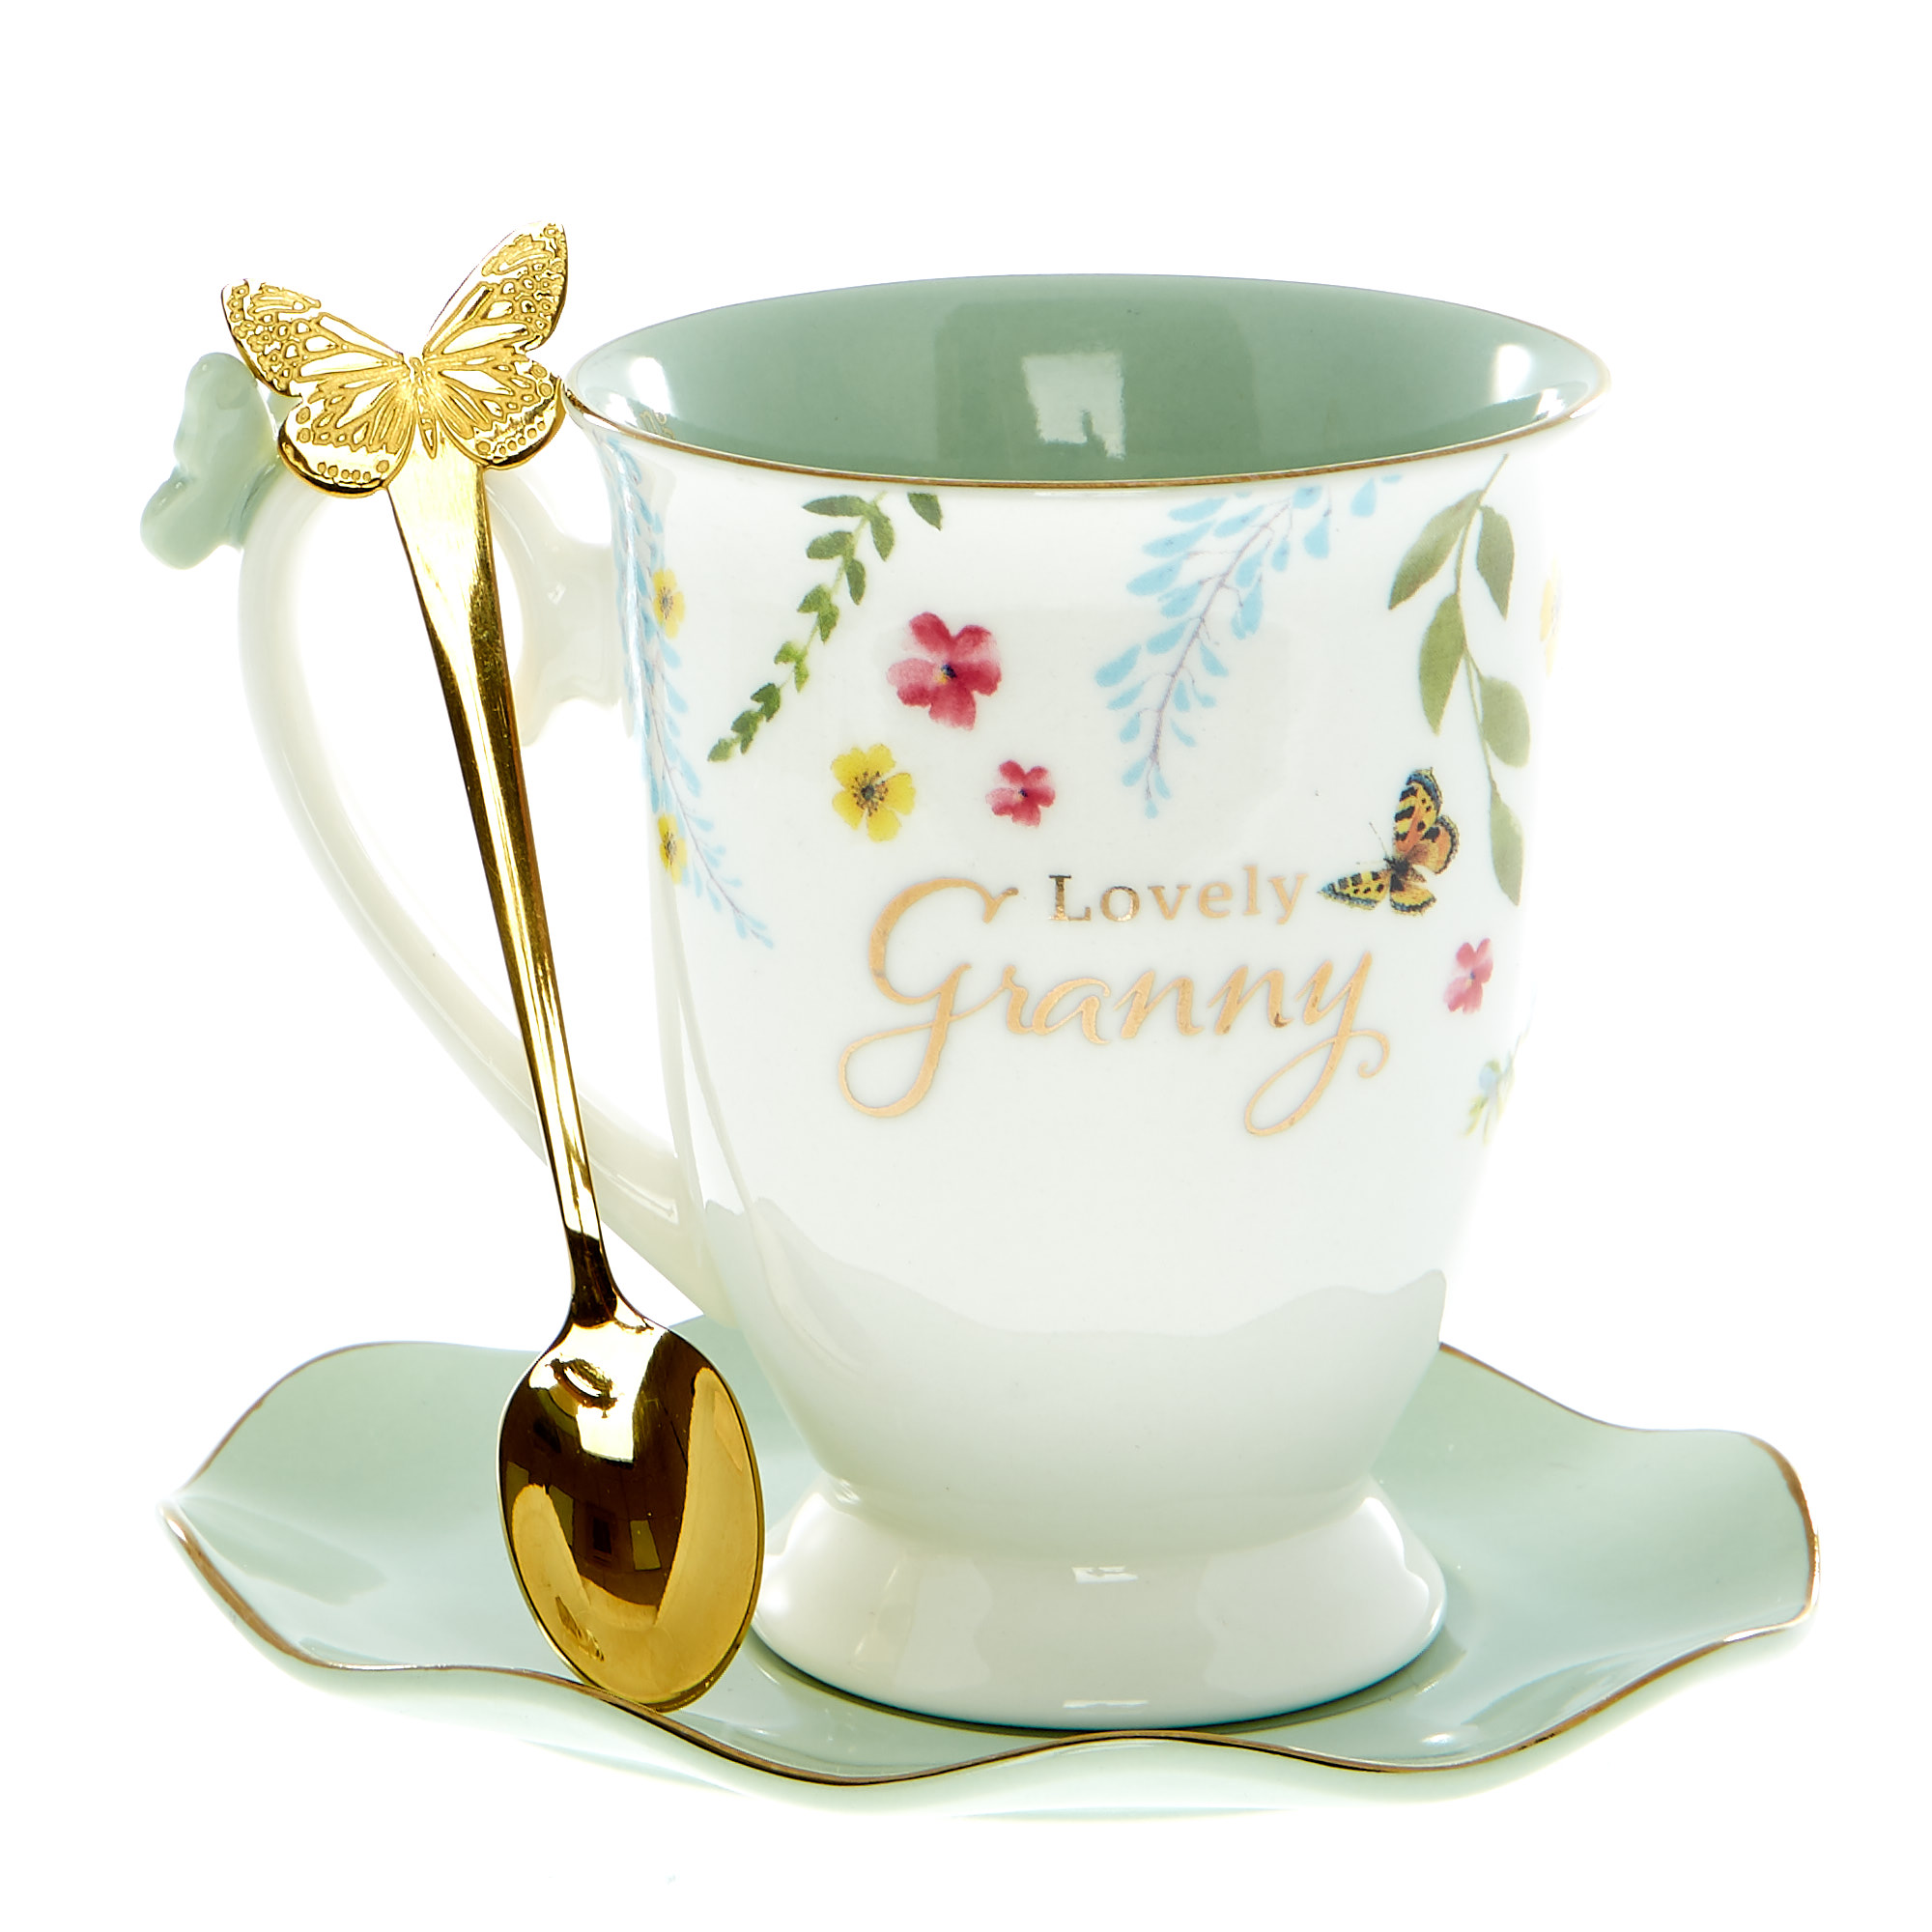 Lovely Granny Teacup, Saucer & Spoon Set